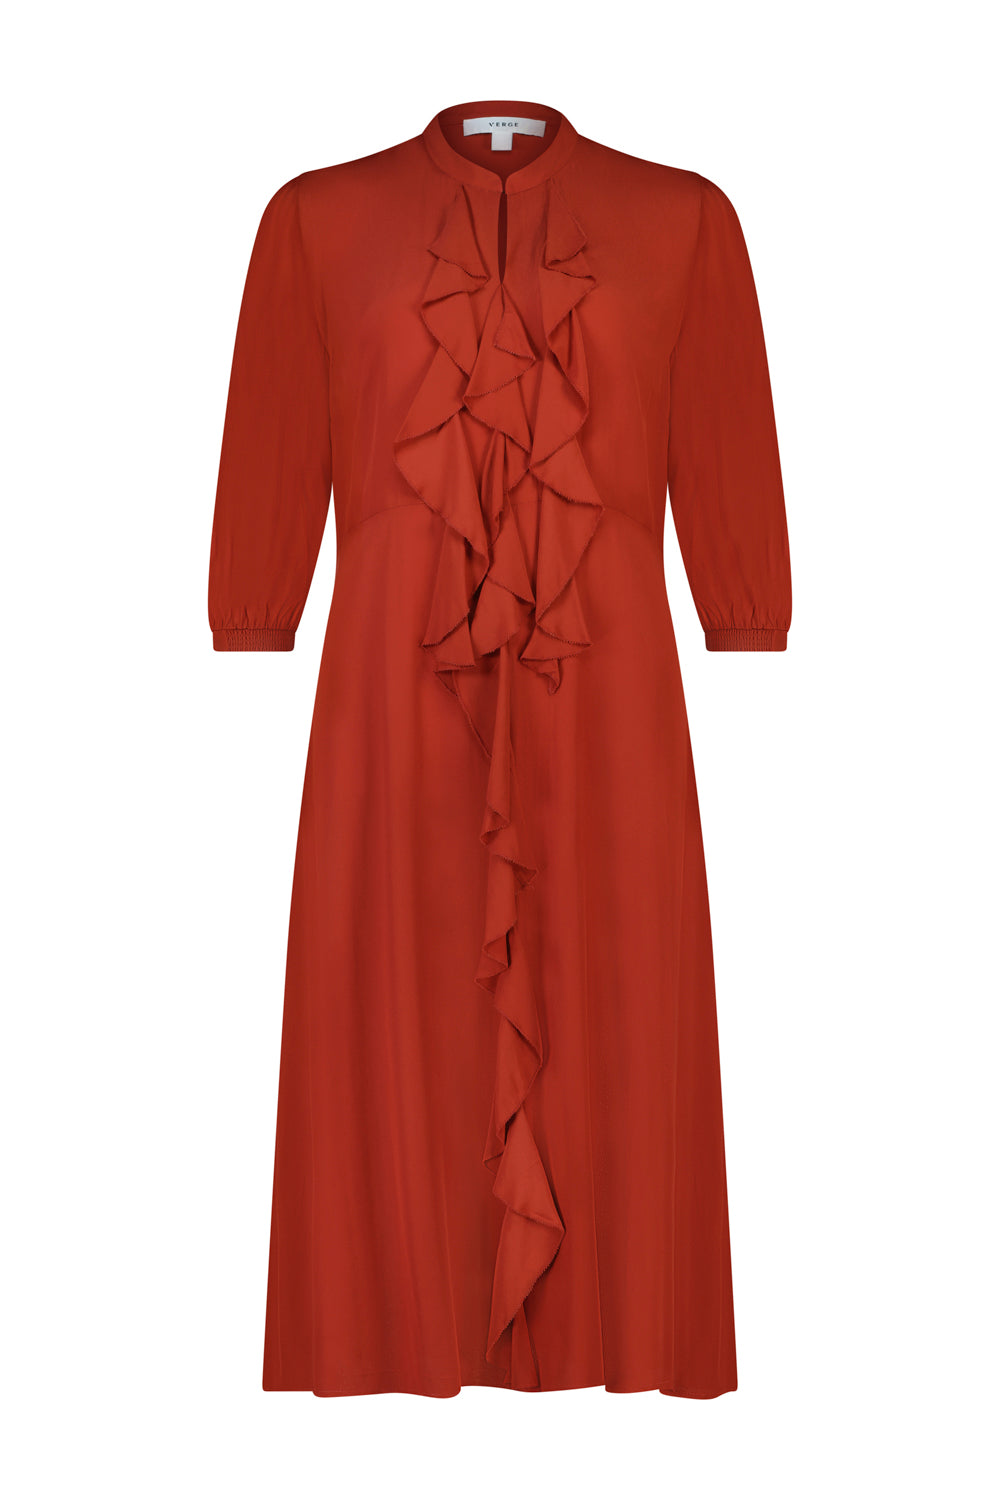 Georgia Dress - Paprika - Dress VERGE